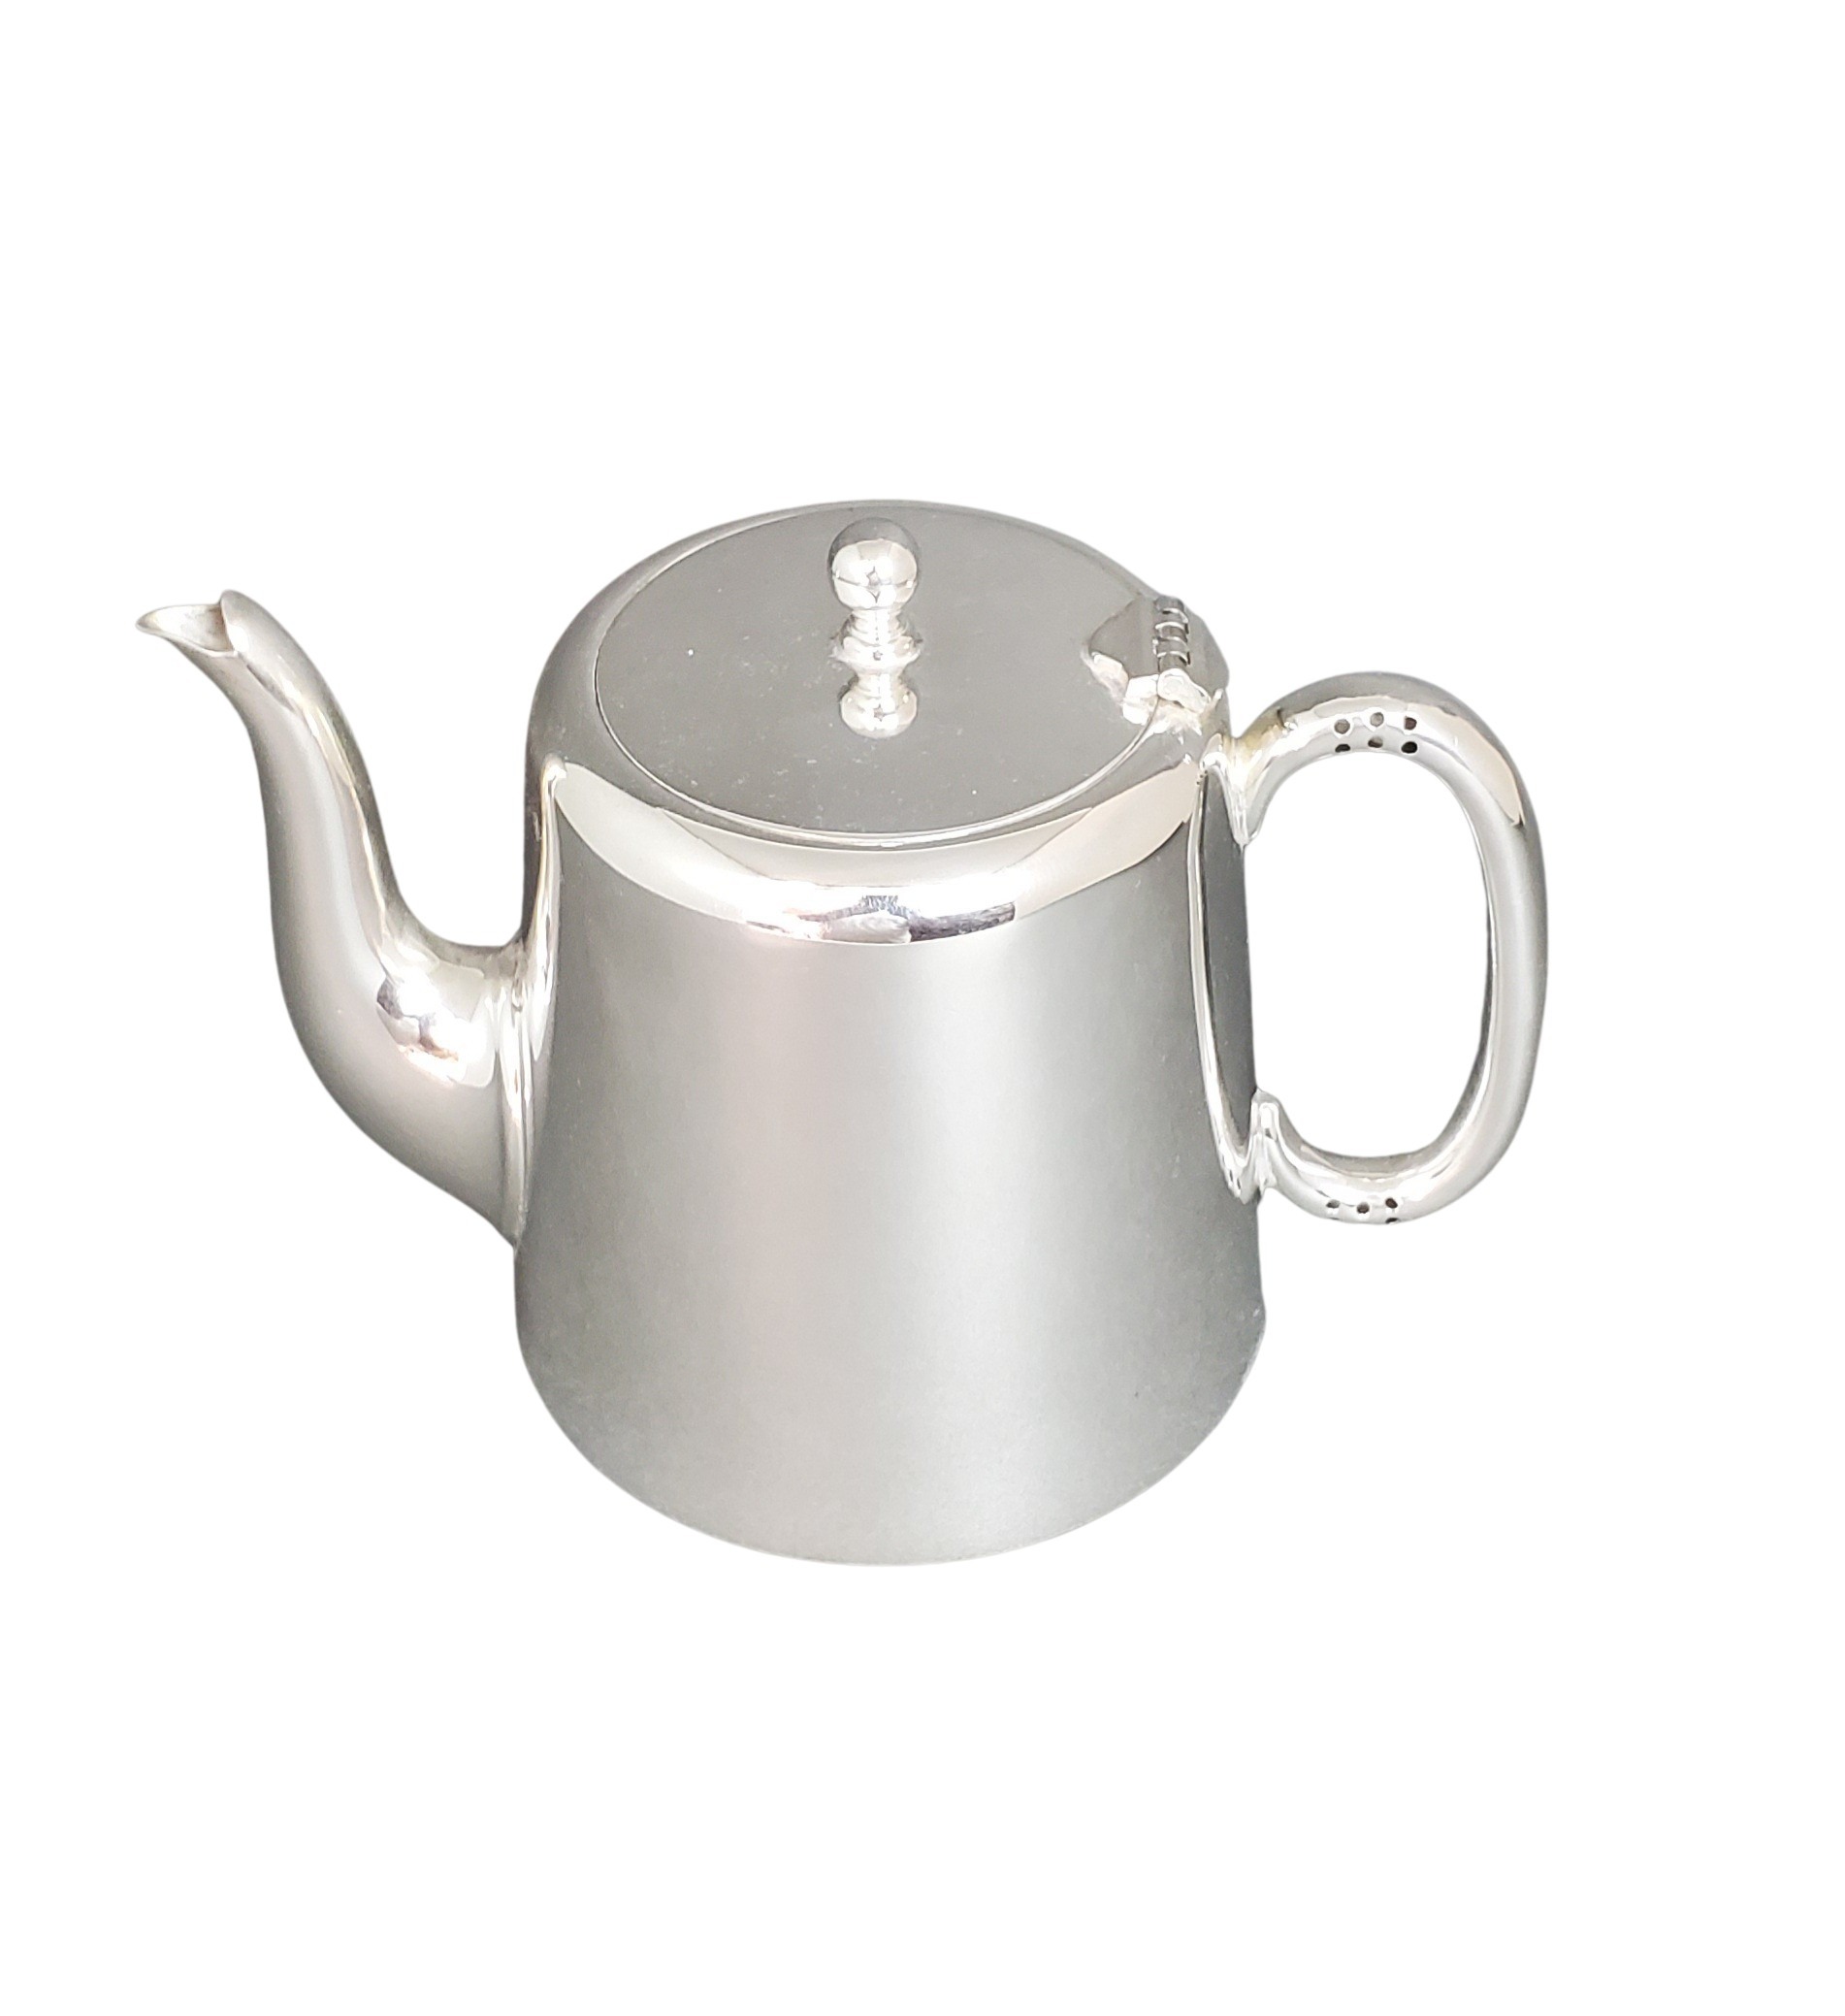 Long Spout Kettle Teapot